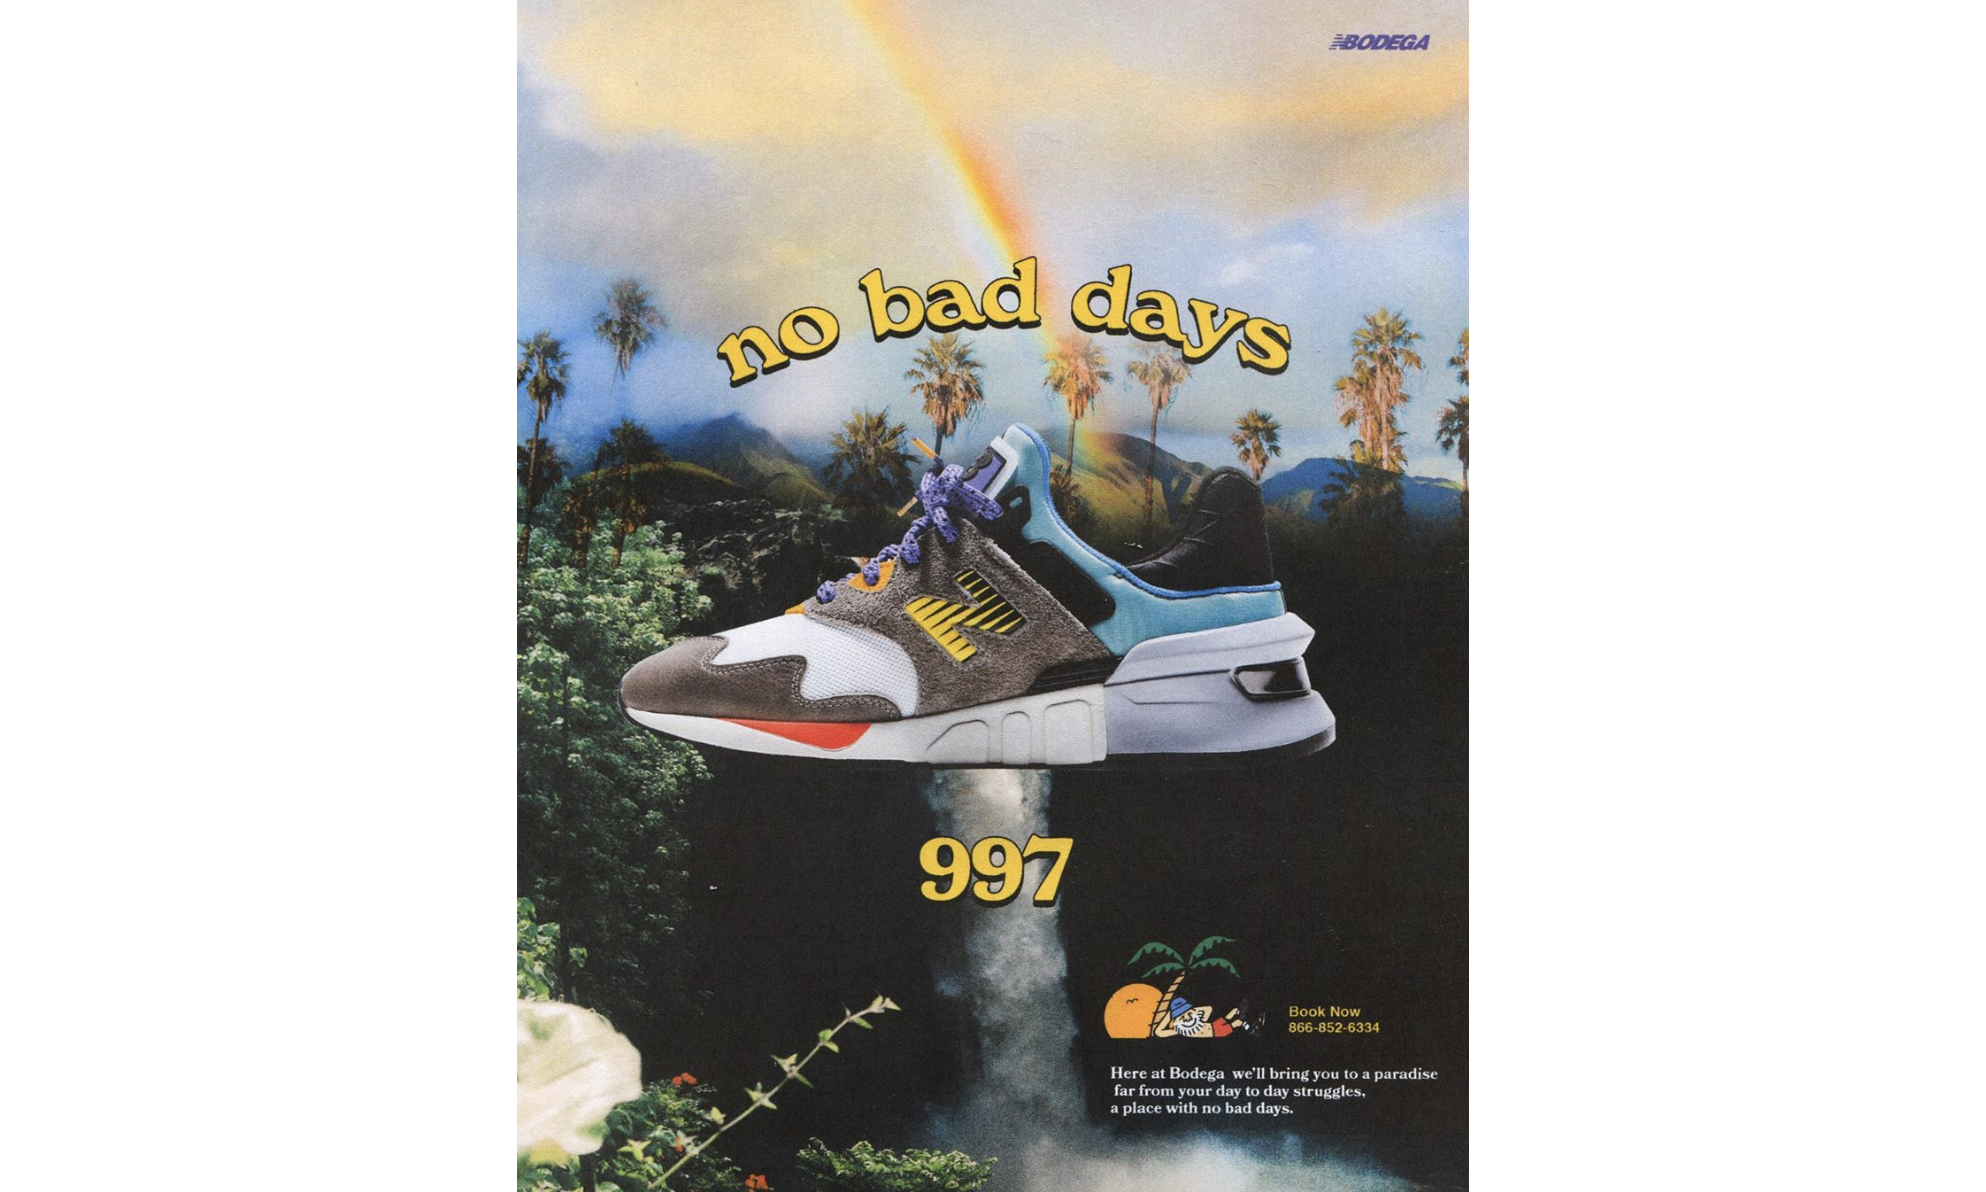 Bodega x New Balance 997S “No Bad Days” 终于要发售了